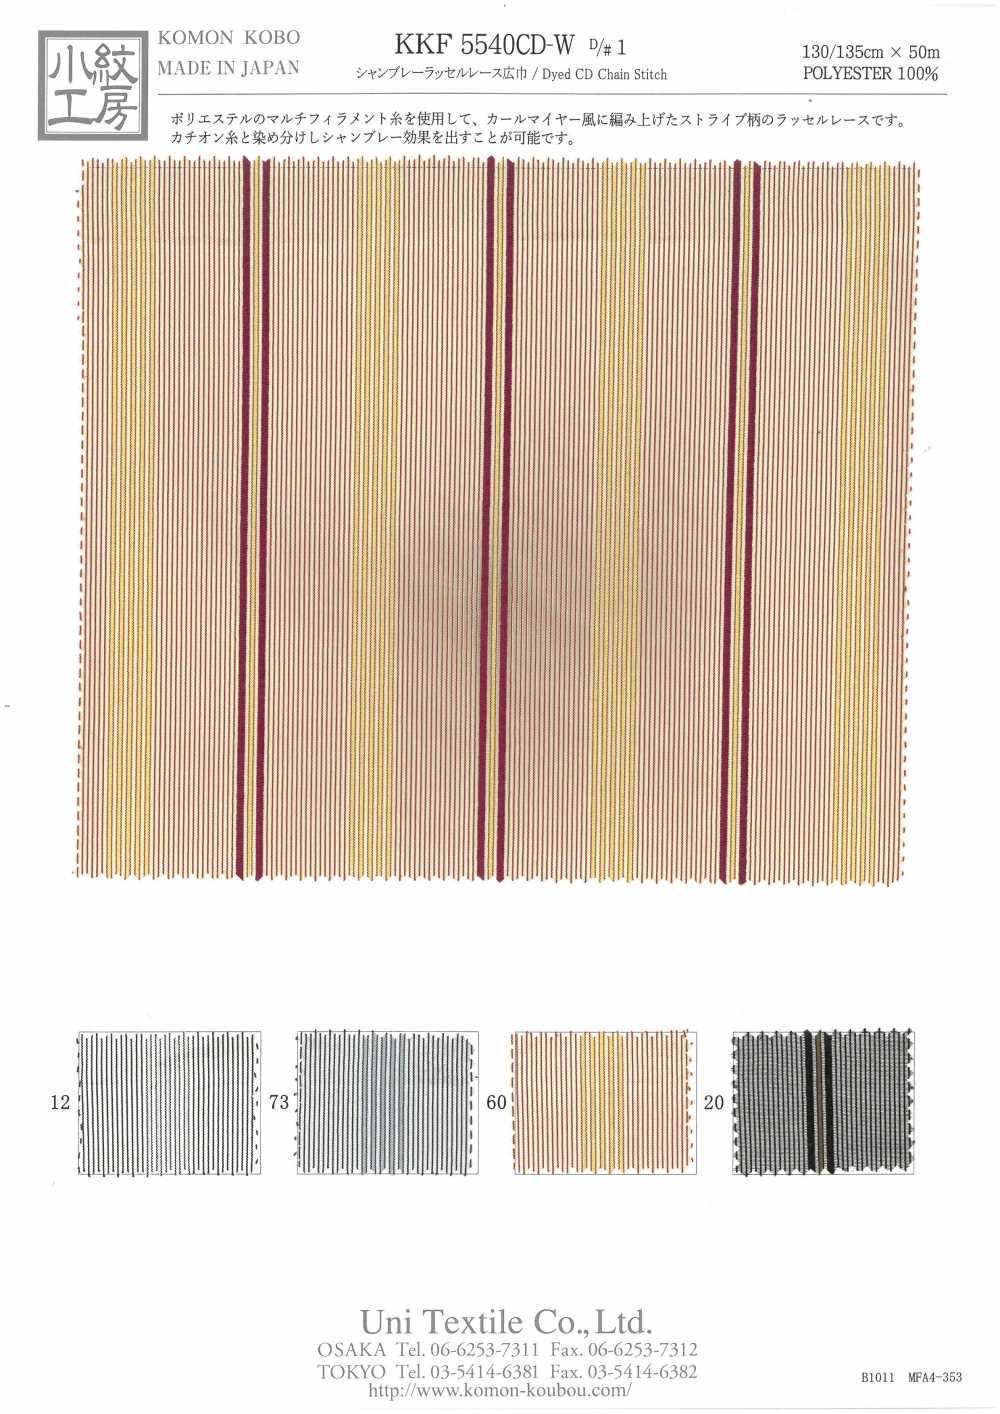 KKF5540CD-W-D/1 Chambray Encaje Raschel Ancho Ancho[Fabrica Textil] Uni Textile